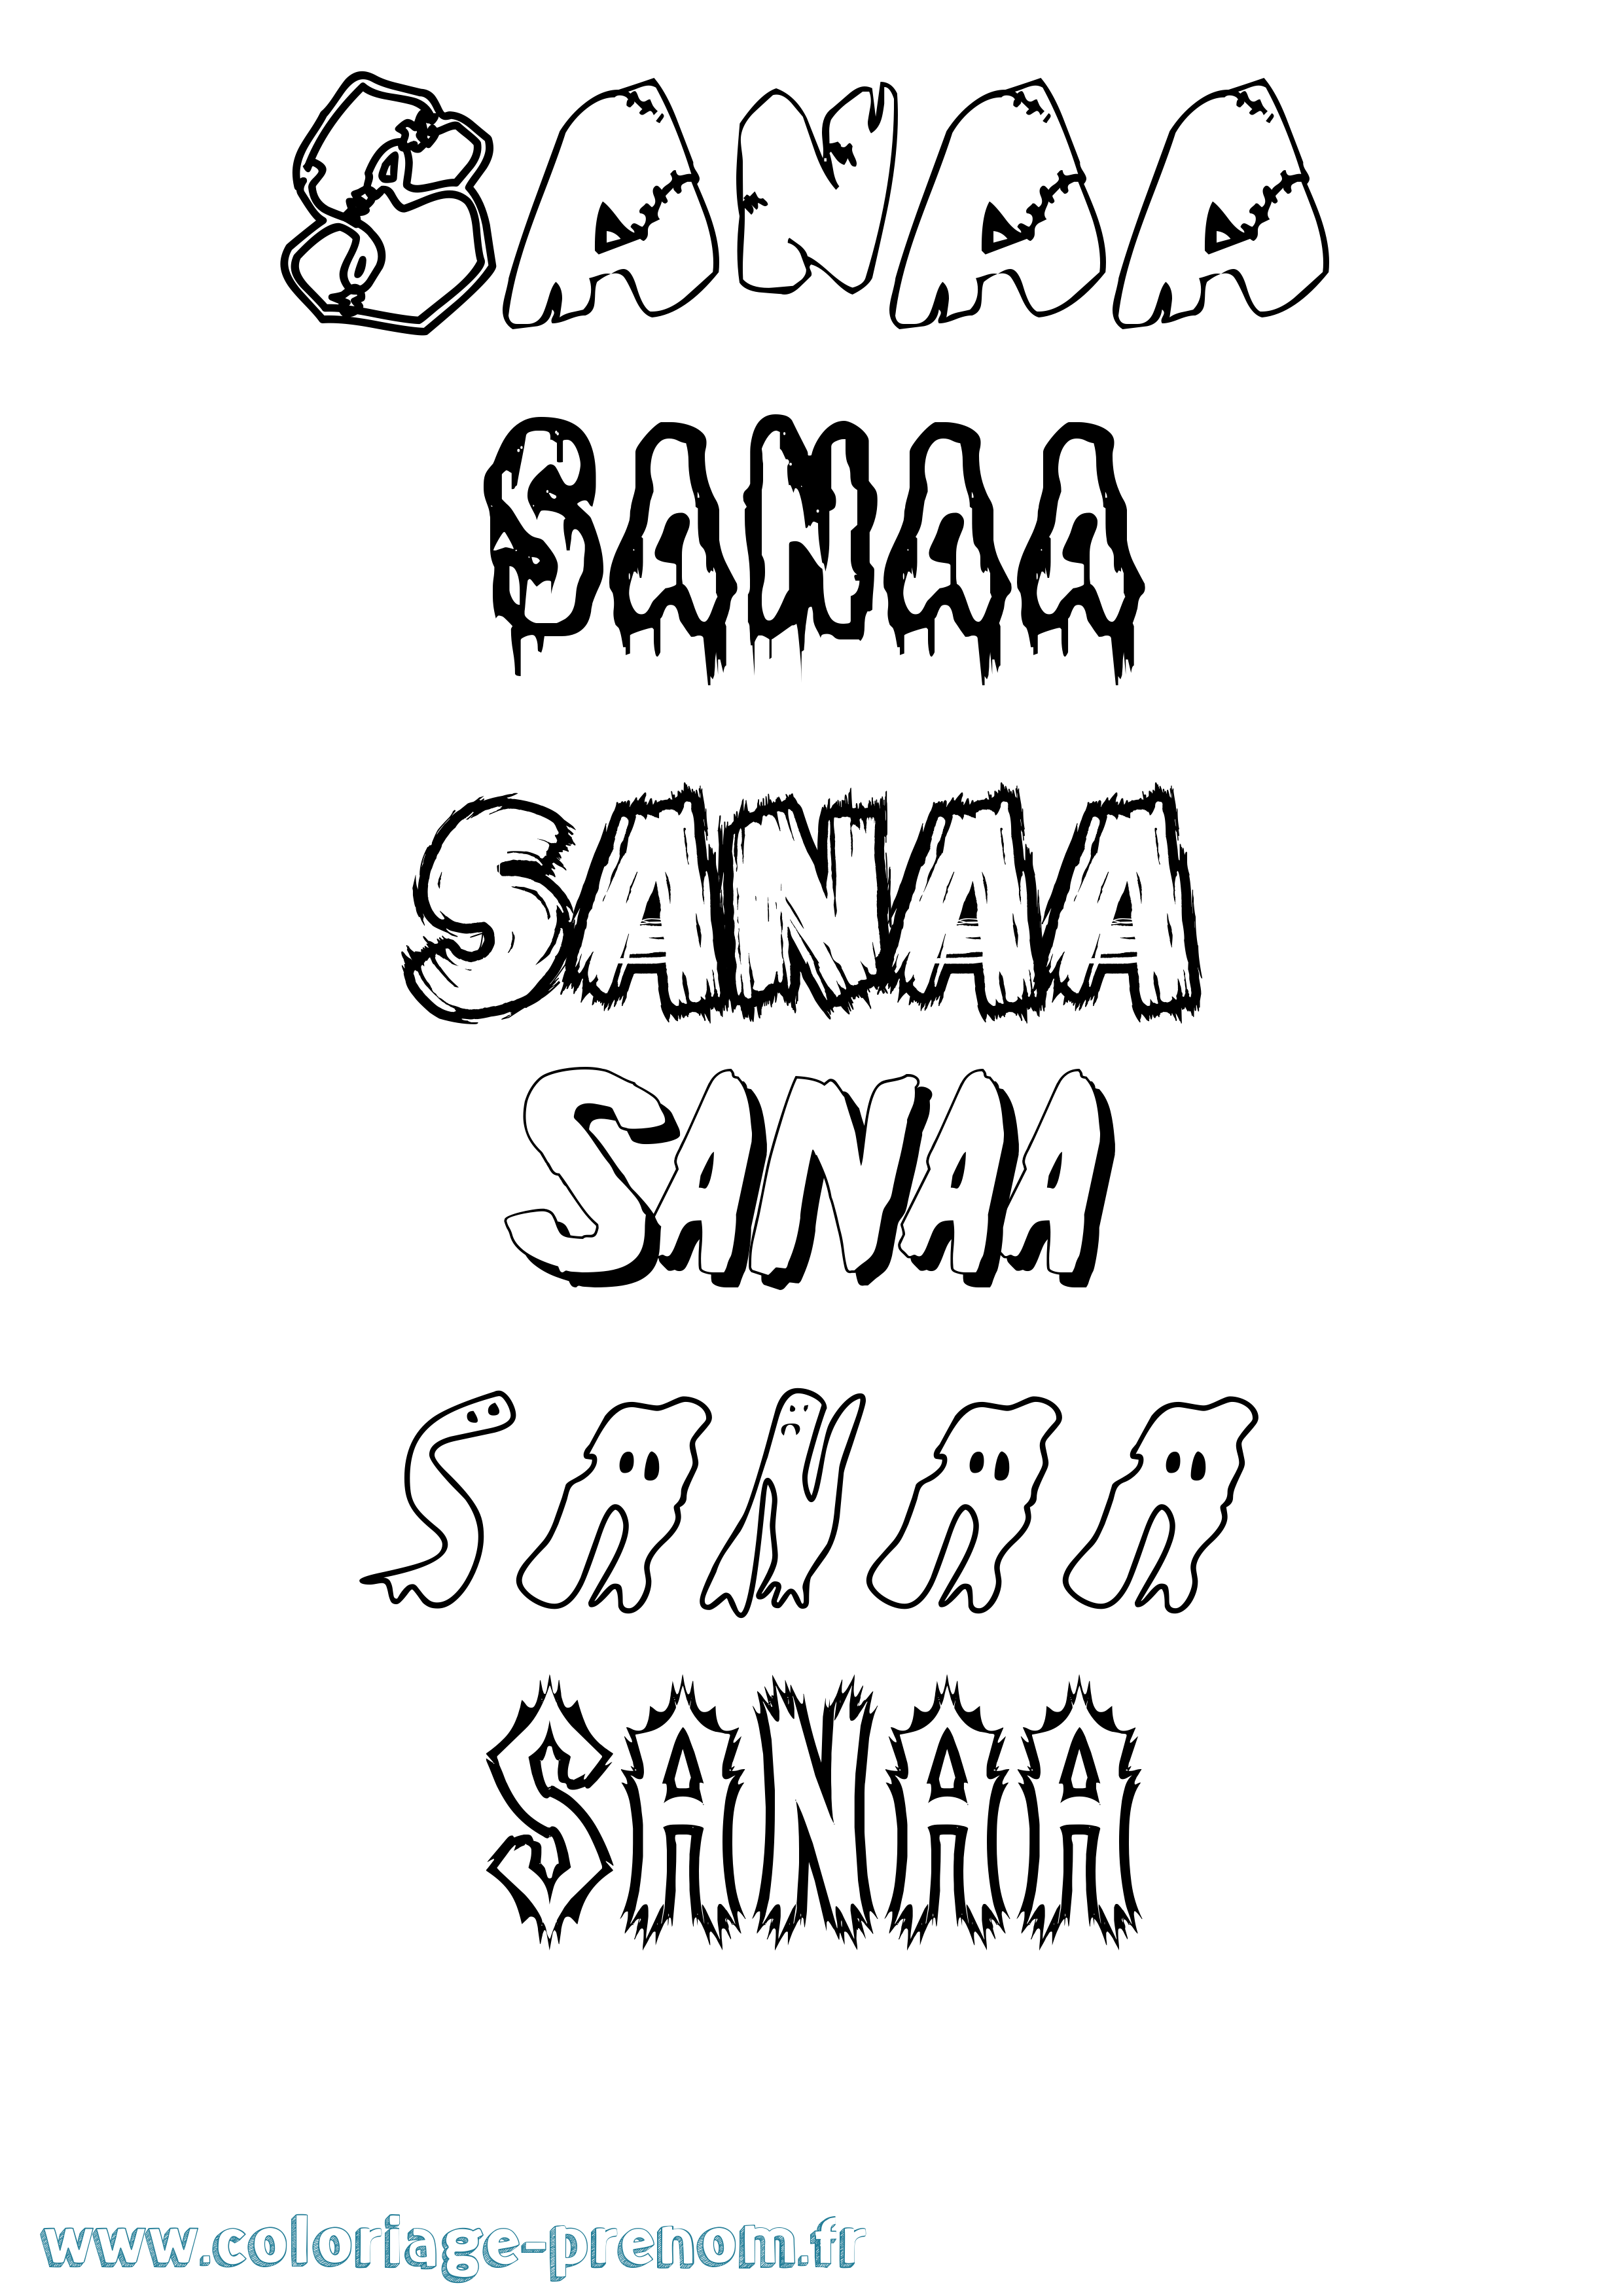 Coloriage prénom Sanaa